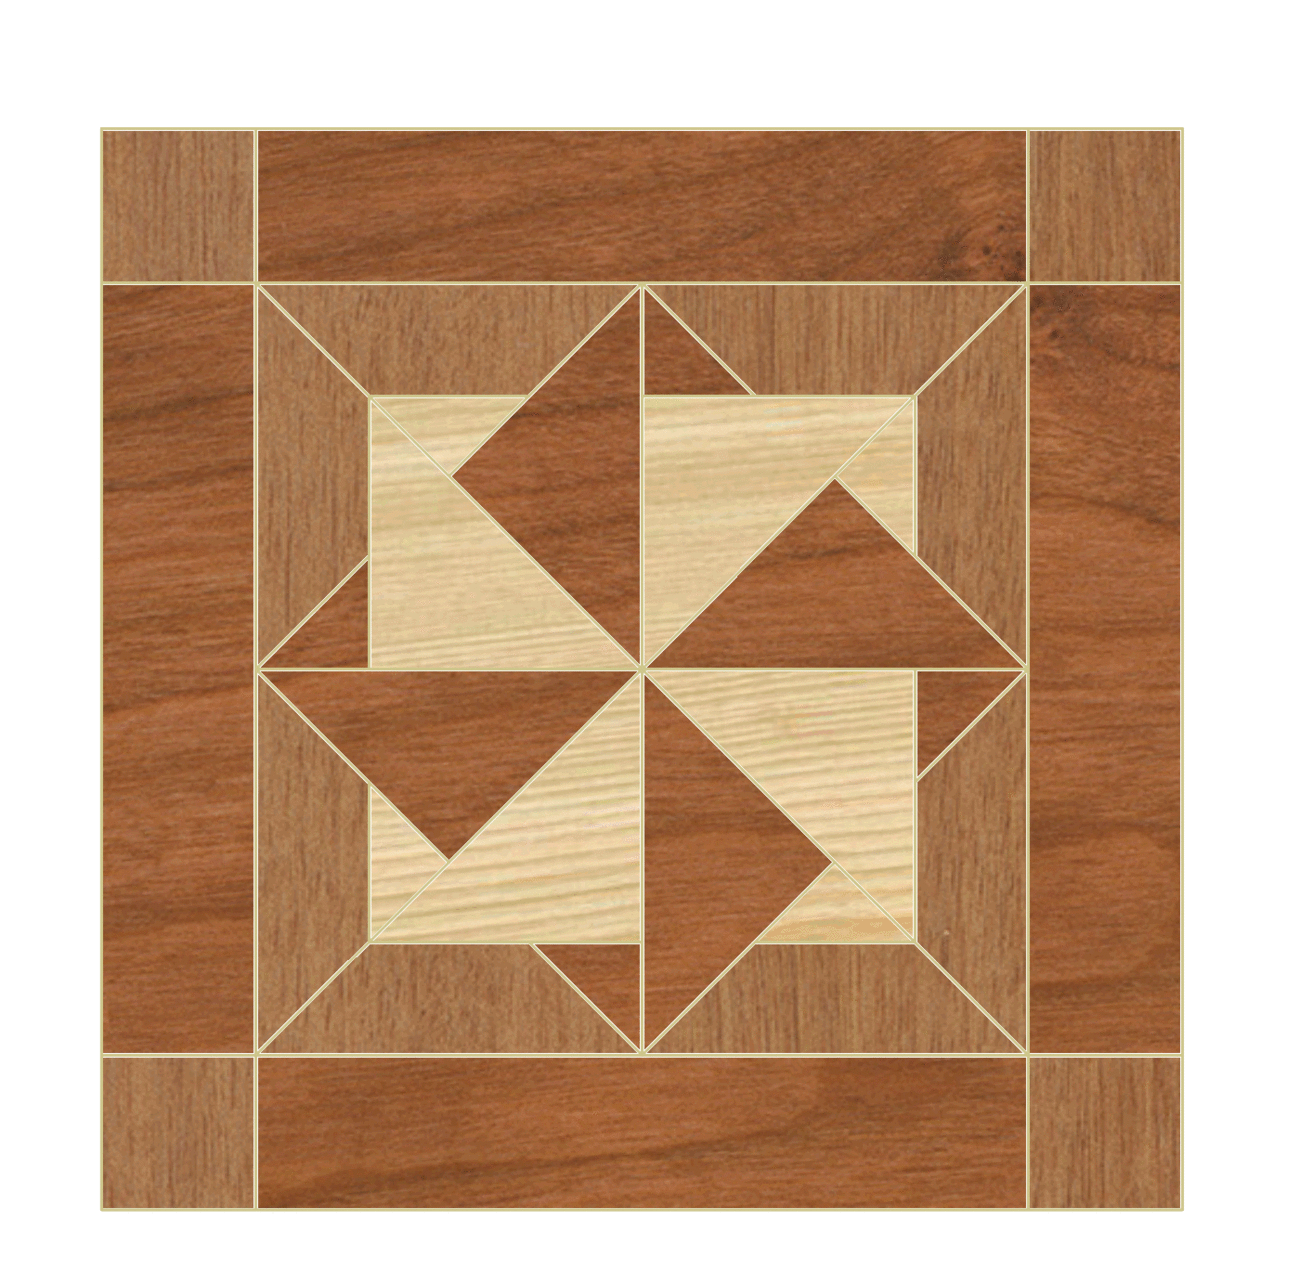 Woodworking patterns.com